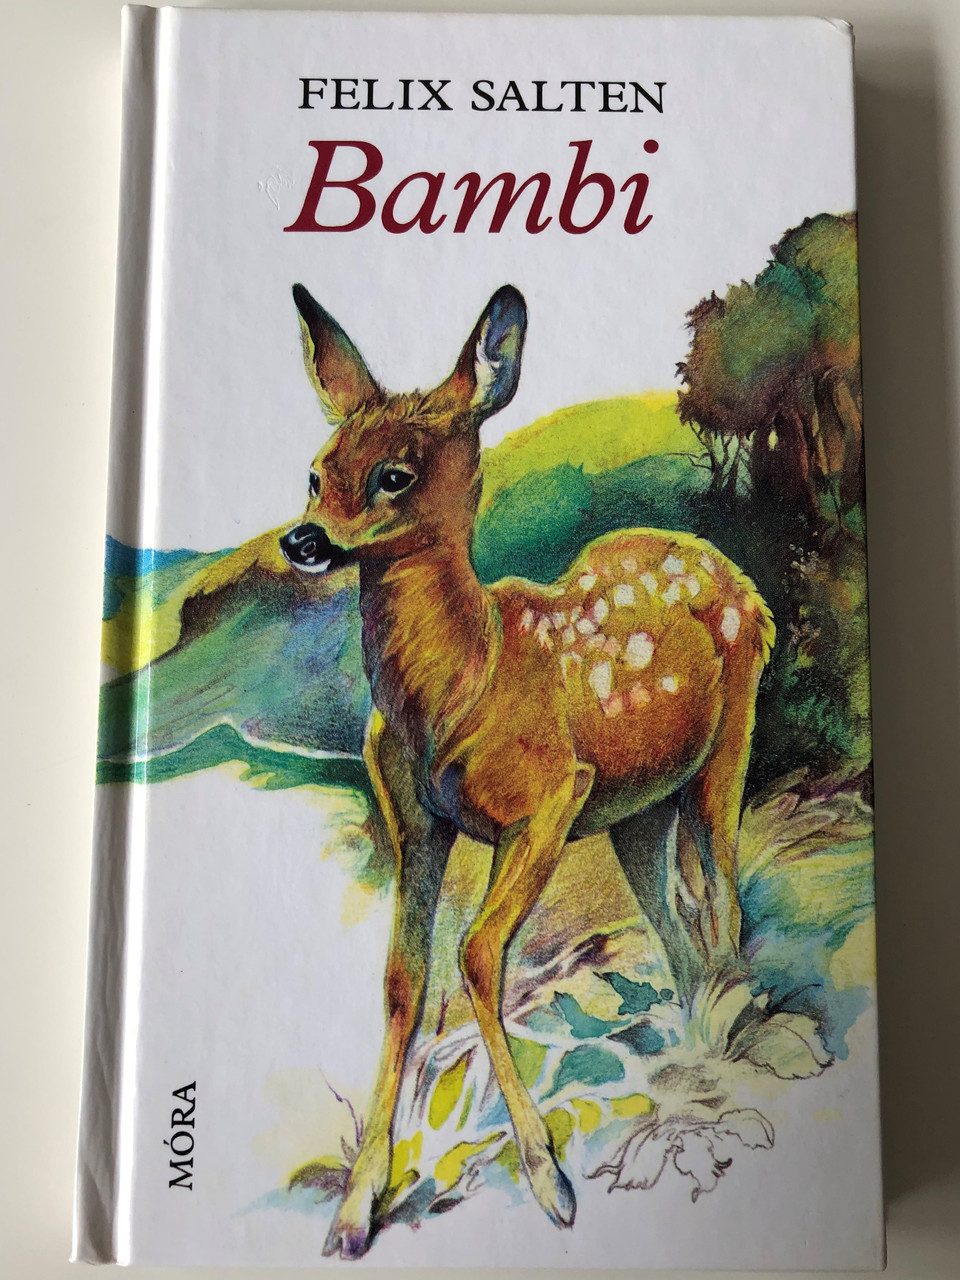 Bambi by Felix Salten / Hungarian Edition of Bambi, Eine Lebensgeschichte  aus dem walde / Móra könyvkiadó 2007 / Translated by Fenyő László /  Hardcover 17th edition - bibleinmylanguage